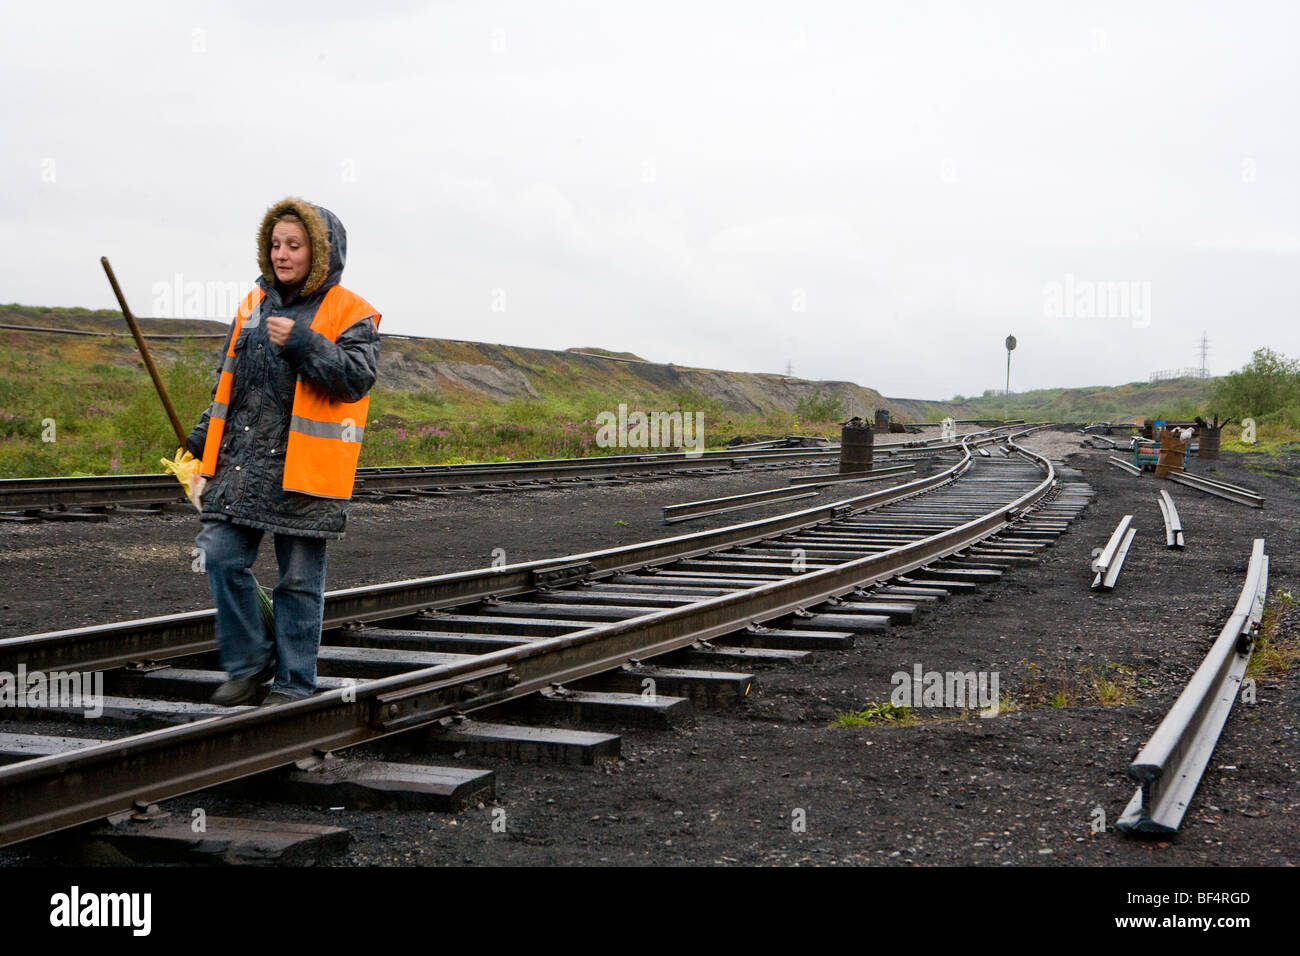 Woman railway worker on railway track in coal mining area, Vorkuta, Komi Republic, Arctic Russia Stock Photo